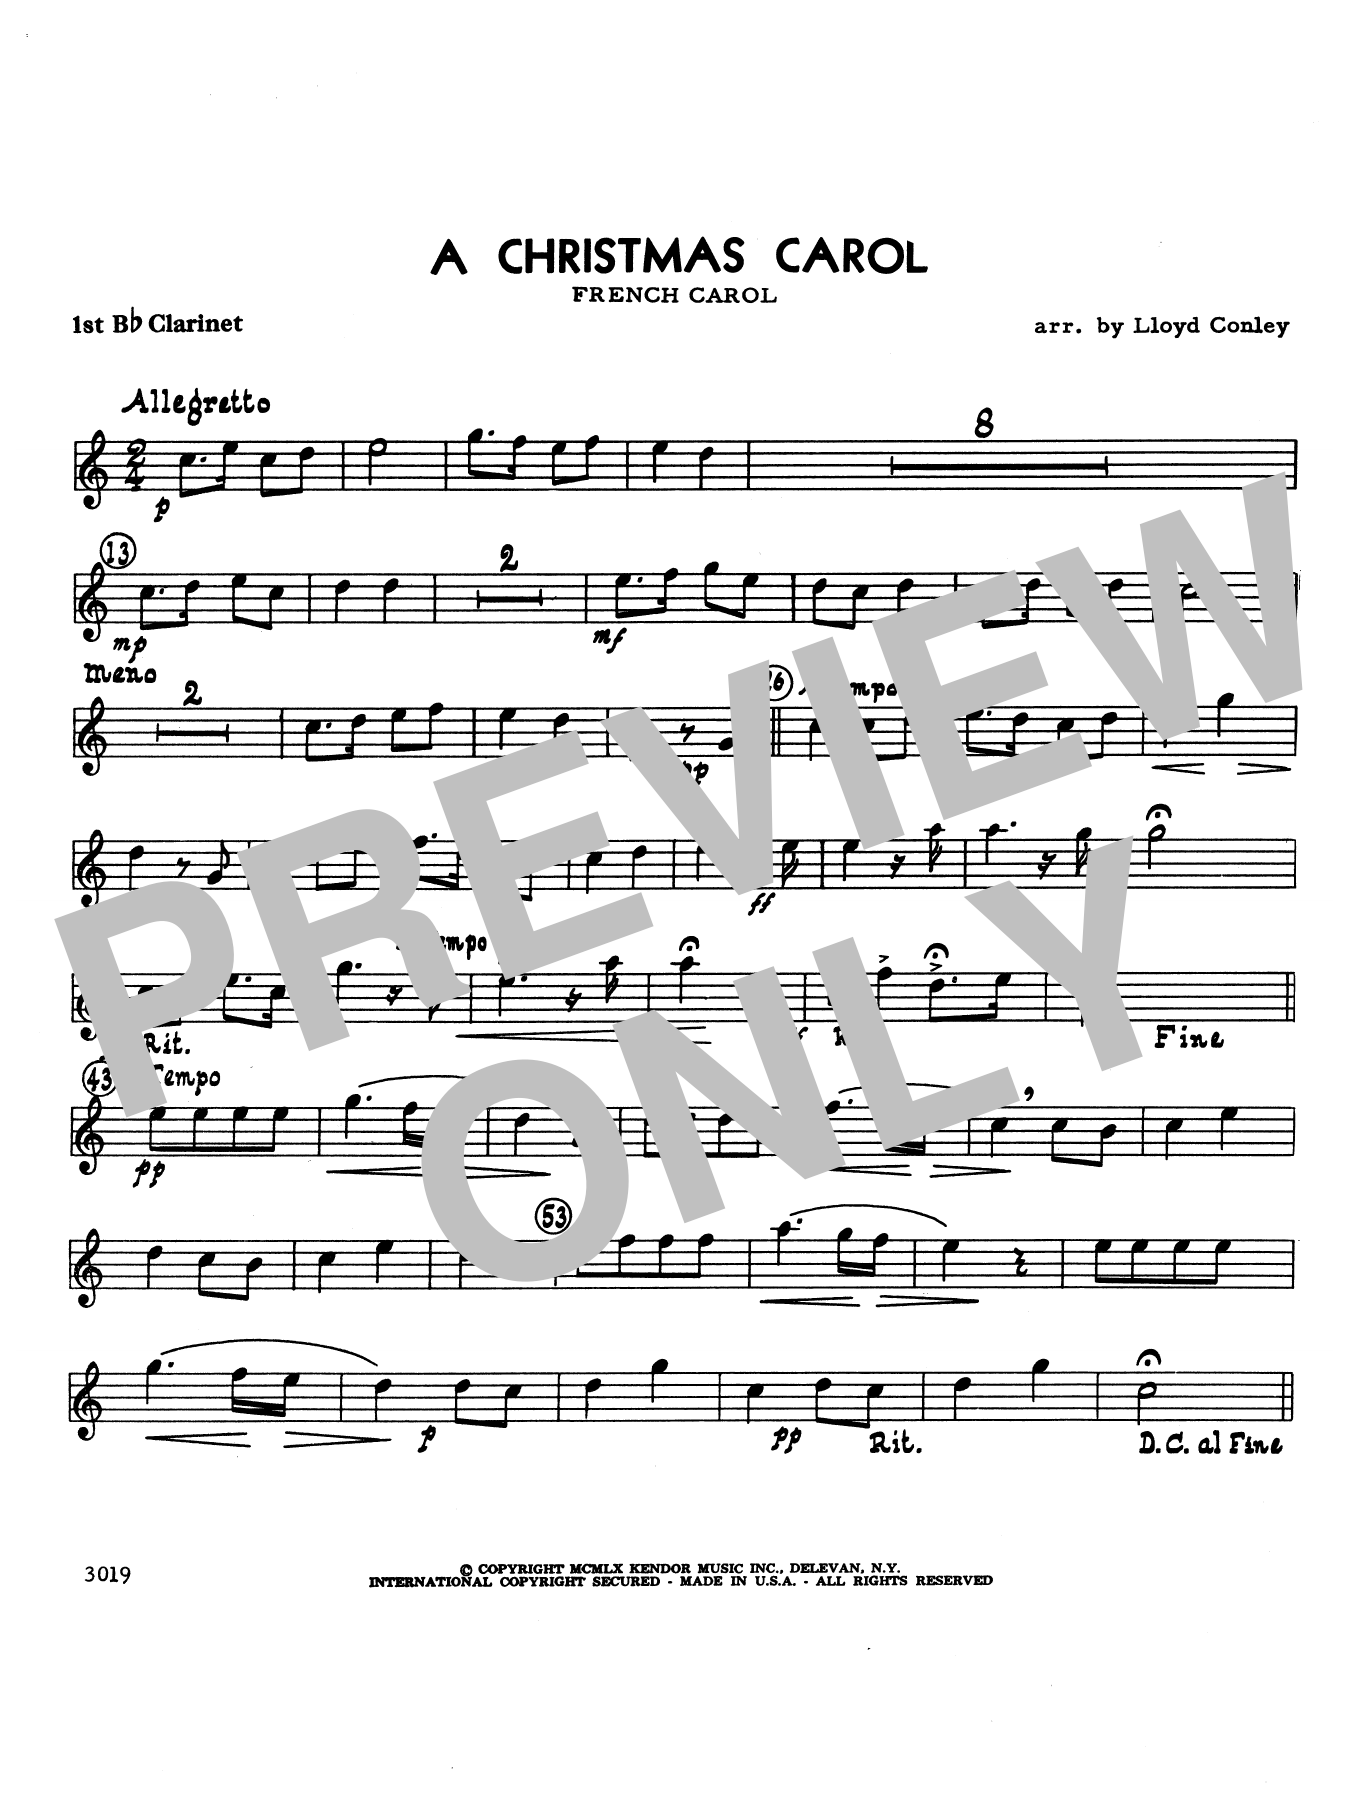 Download Lloyd Conley A Christmas Carol - 1st Bb Clarinet Sheet Music